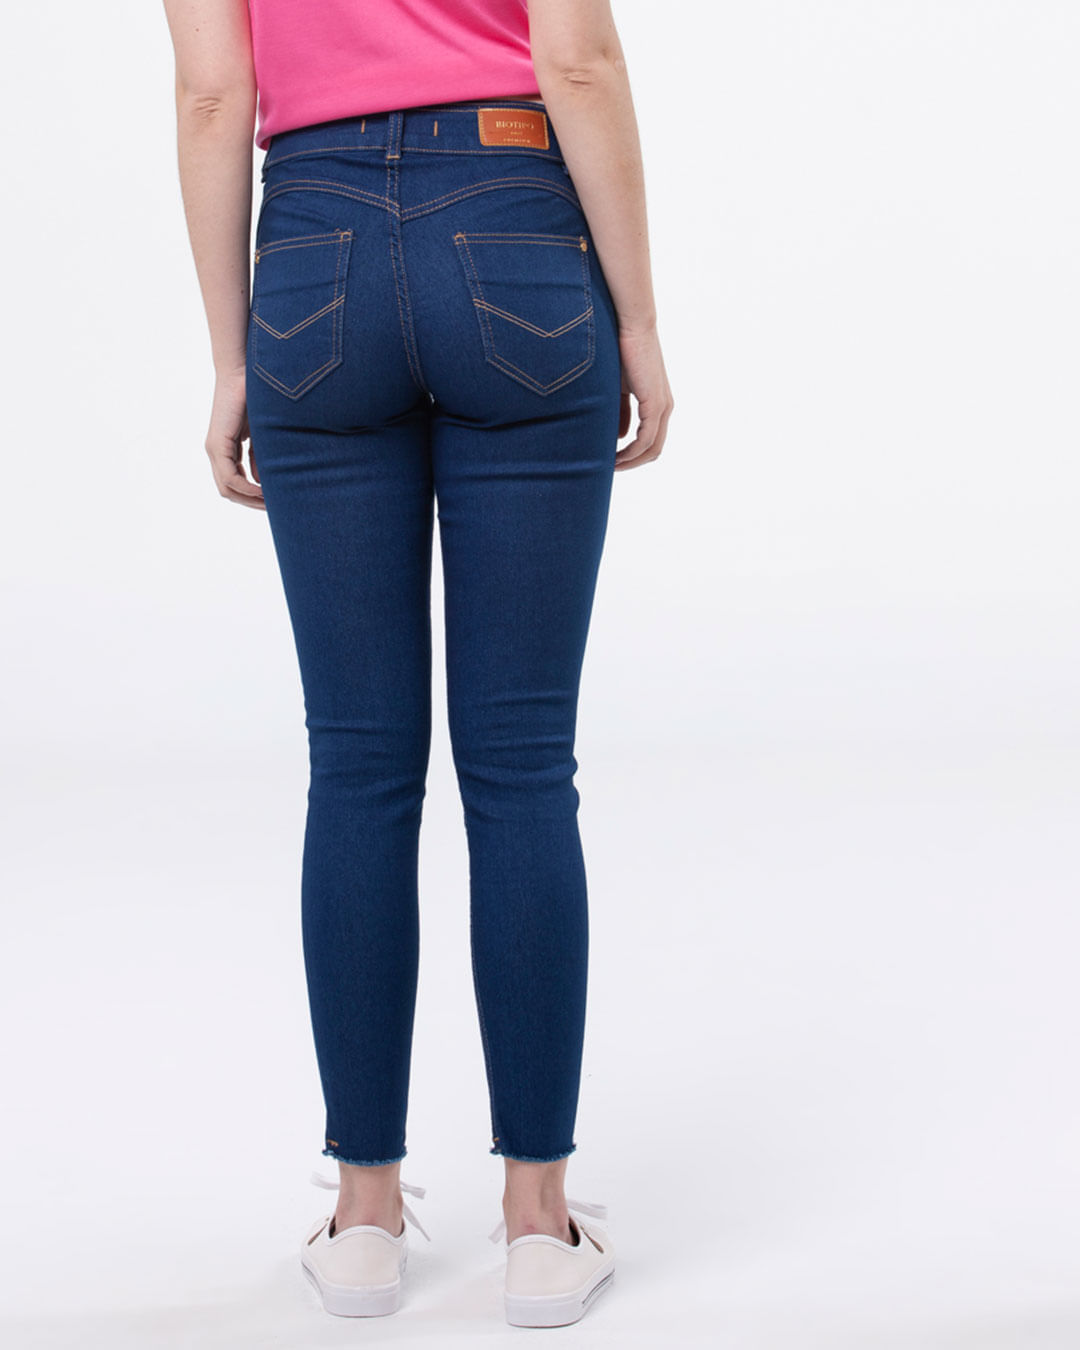 Calca-Jeans-Feminina-Skinny-Destroyed-Biotipo-Azul-Escuro